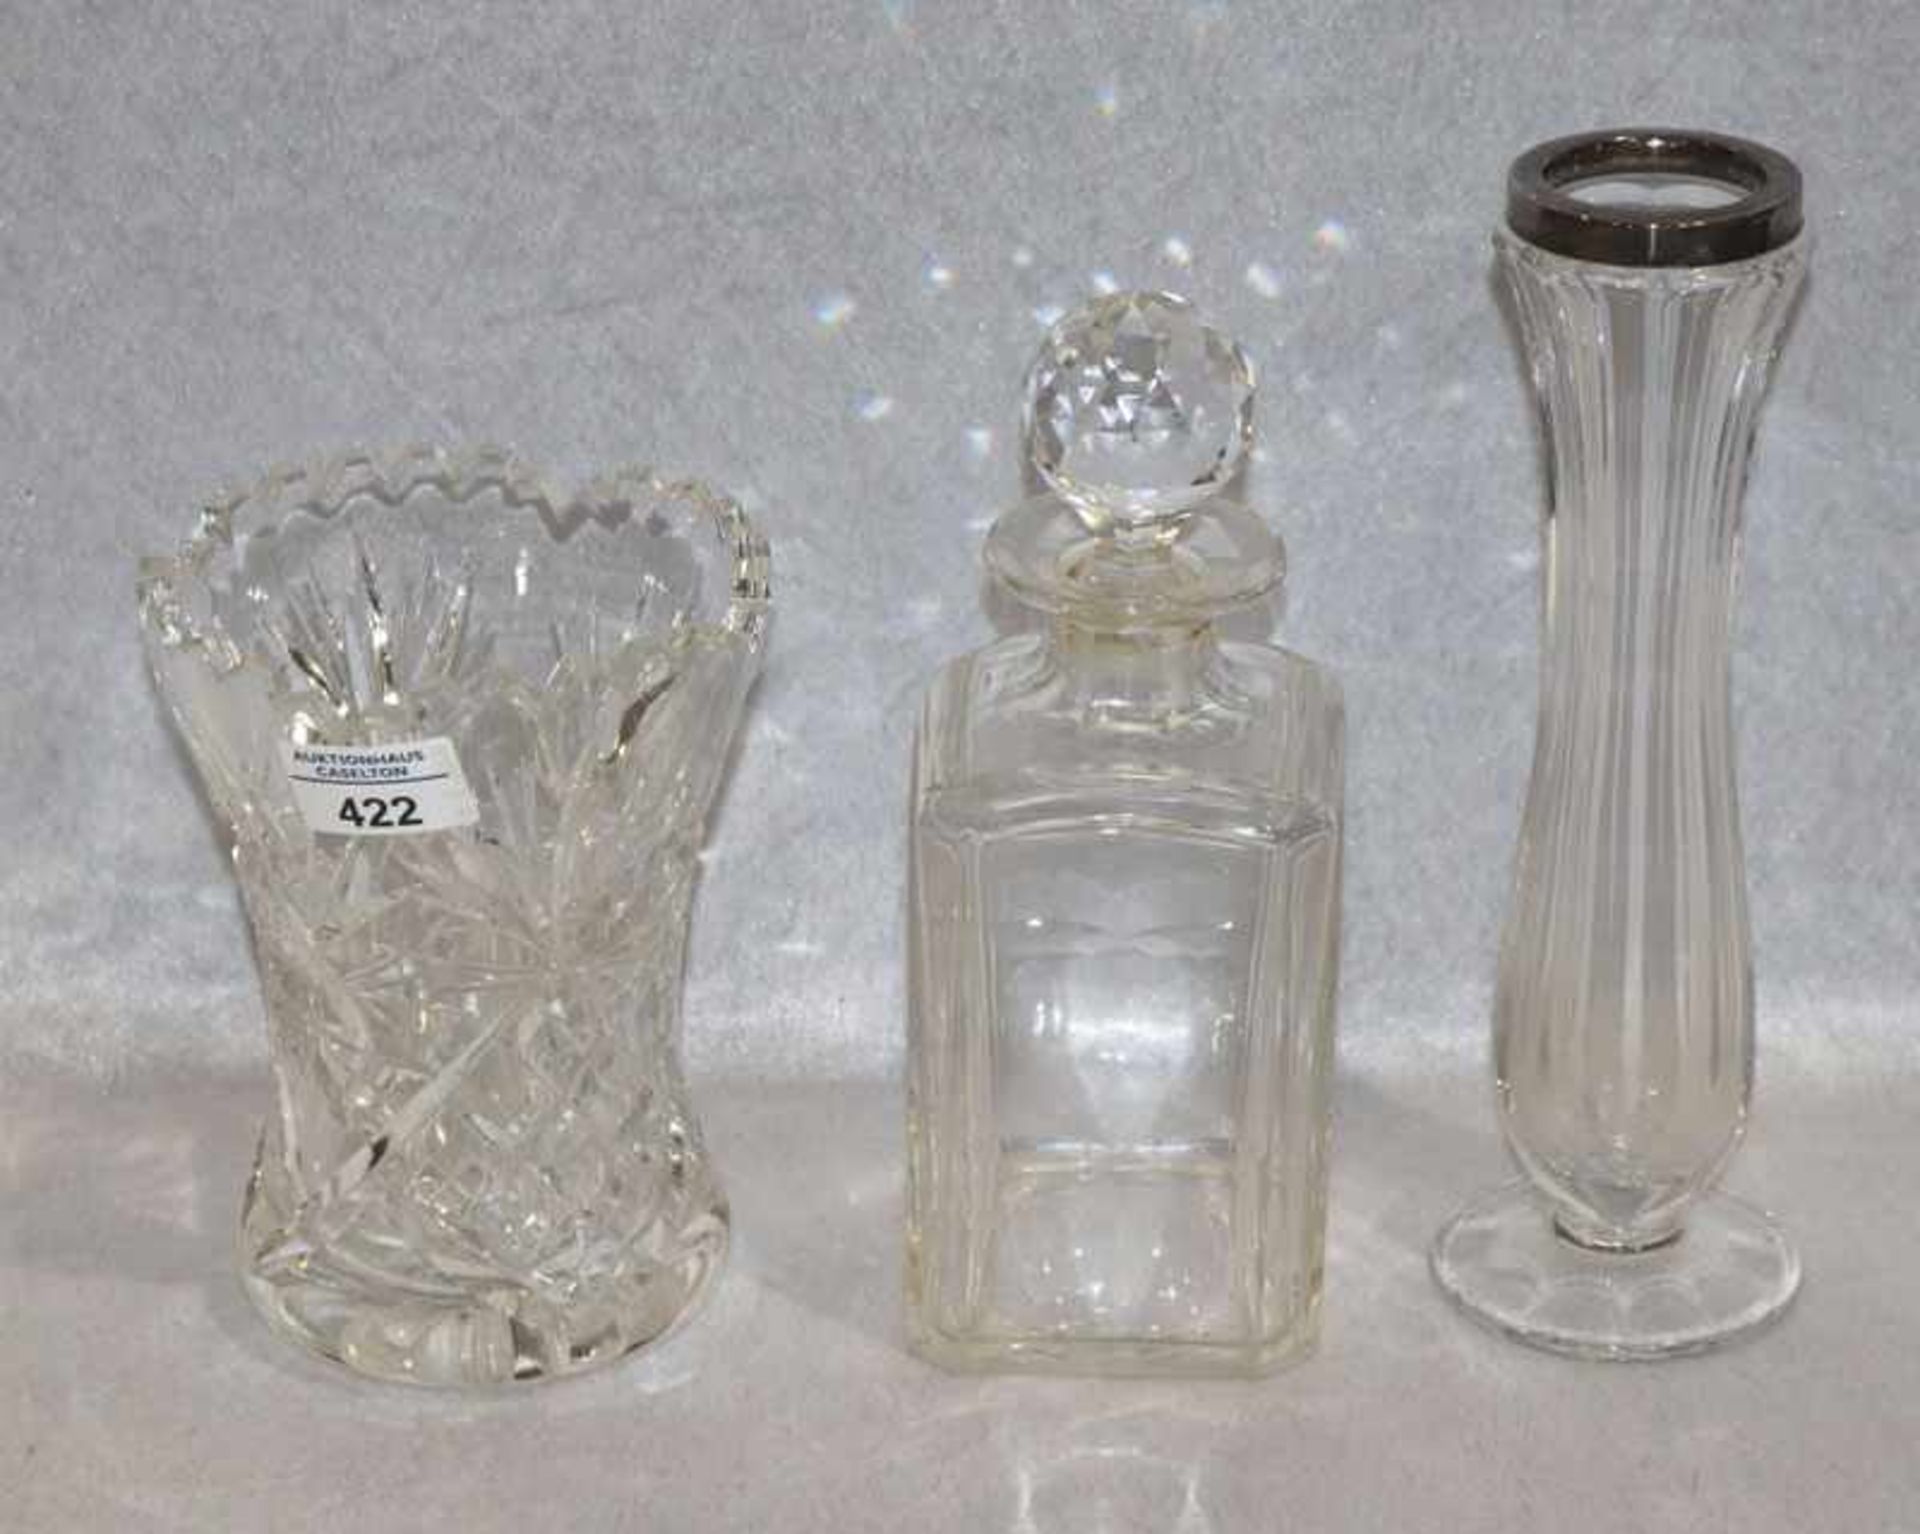 Konvolut: Kristallglas Vase mit Silberrand, H 26 cm, D 8 cm, Kristallglas Vase mit Schliffdekor, H